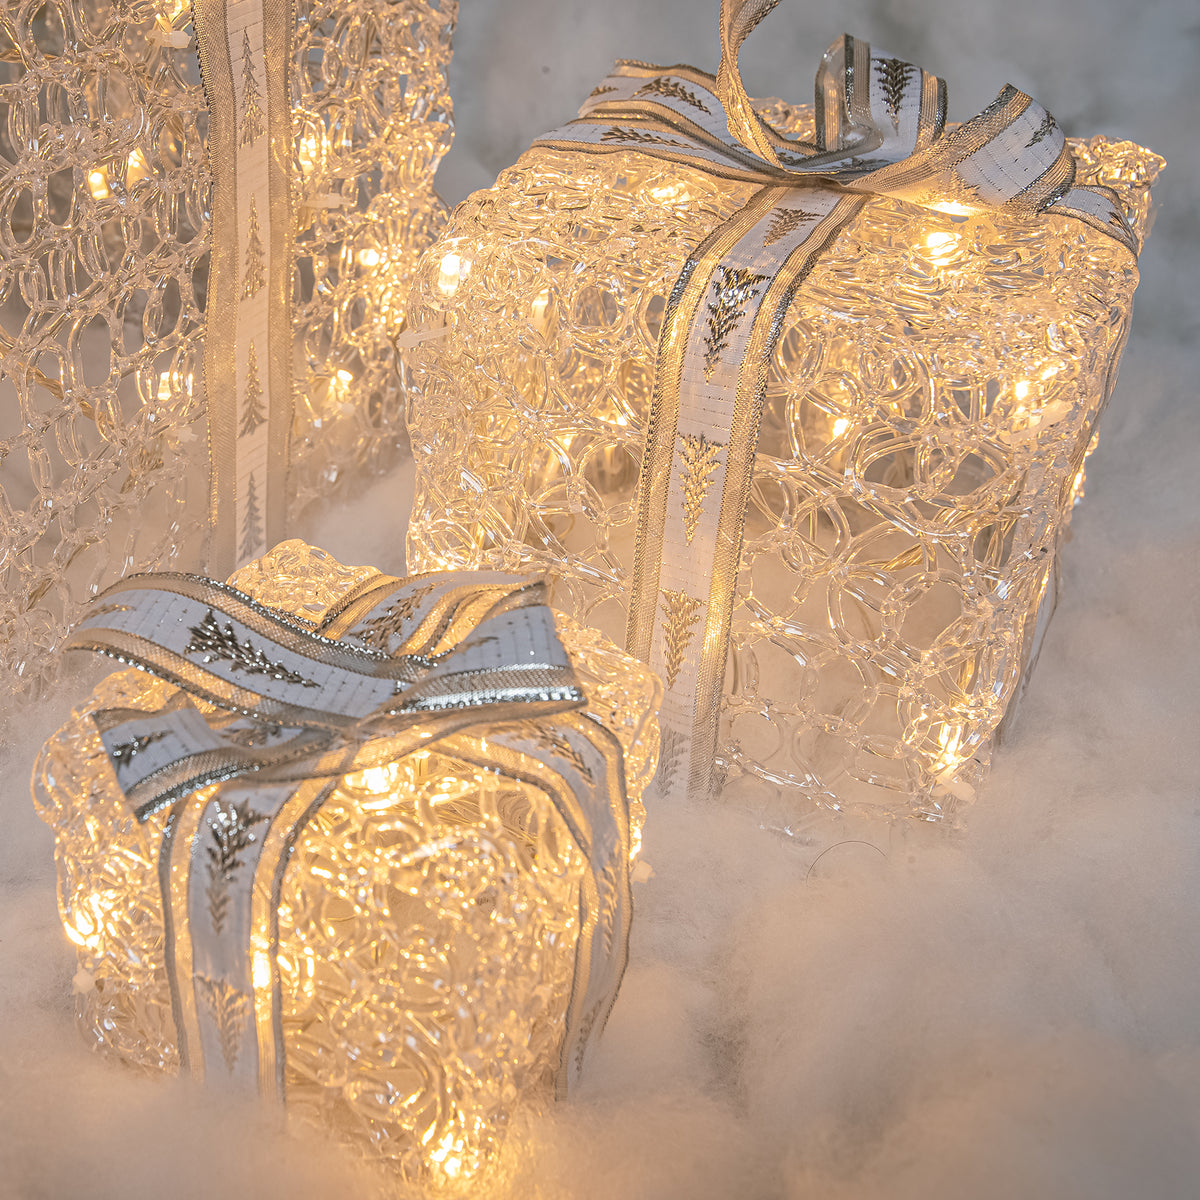 Set of 3 Soft Acrylic Light Up Christmas Parcels with 59 White/Warm White LEDs